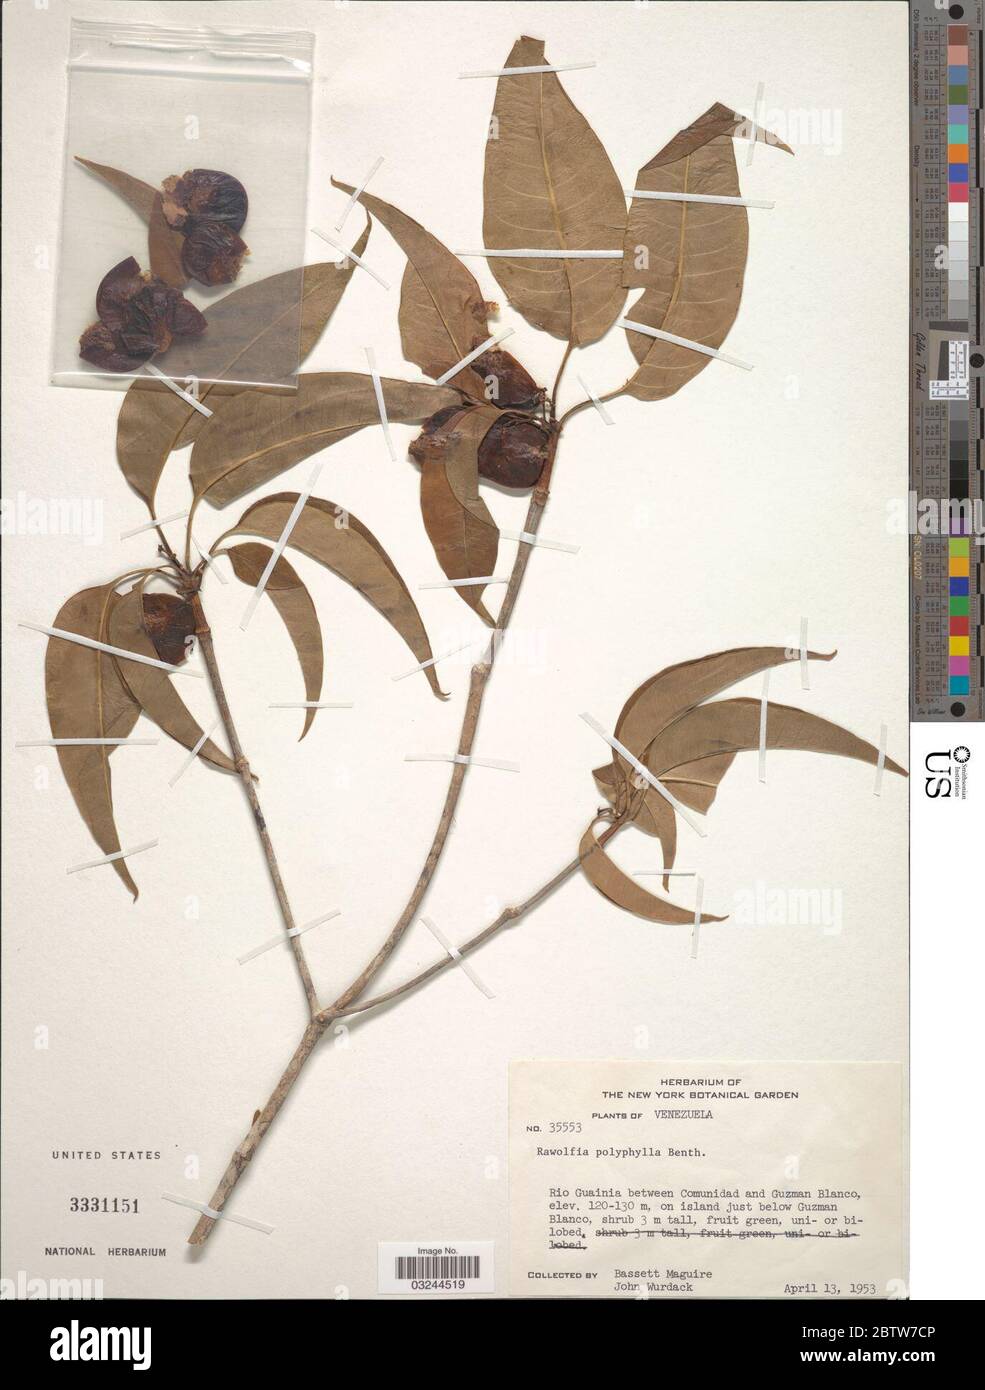 Rauvolfia polyphylla Benth. Stock Photo